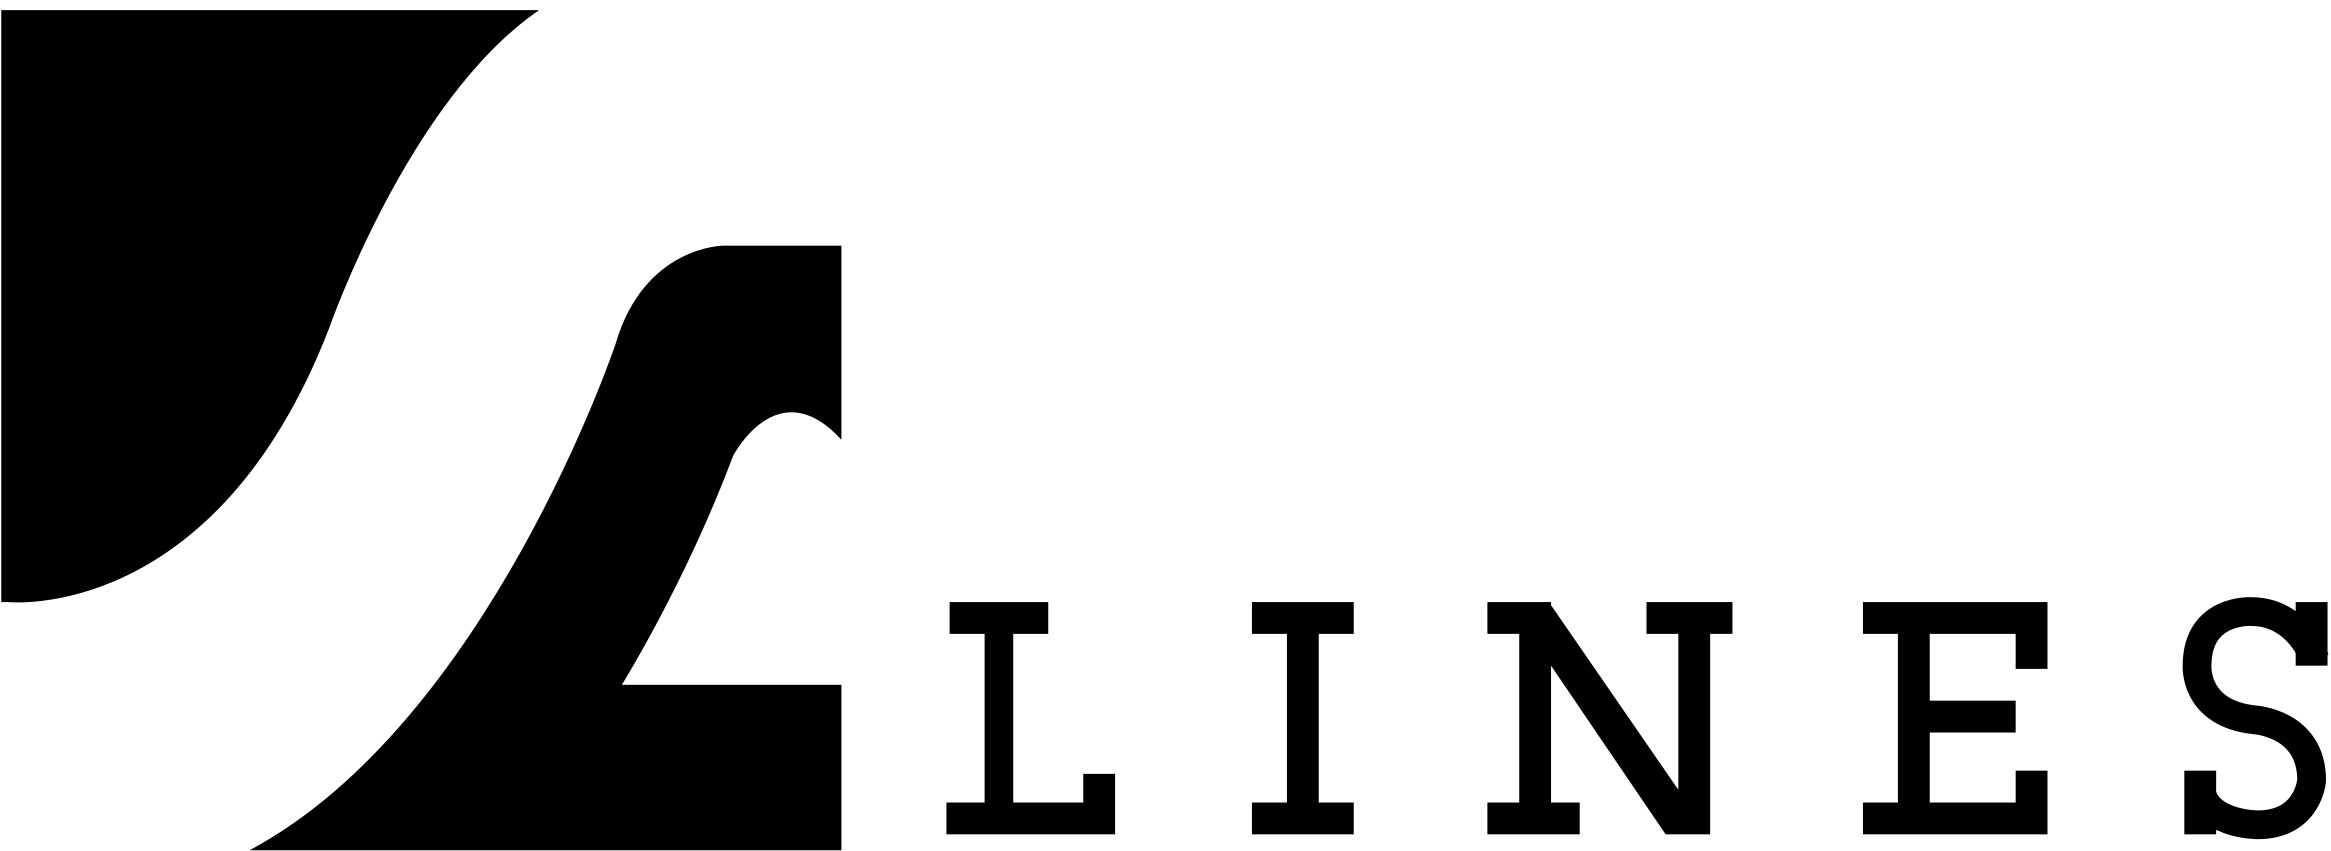 Csx Lines Logo Black And White